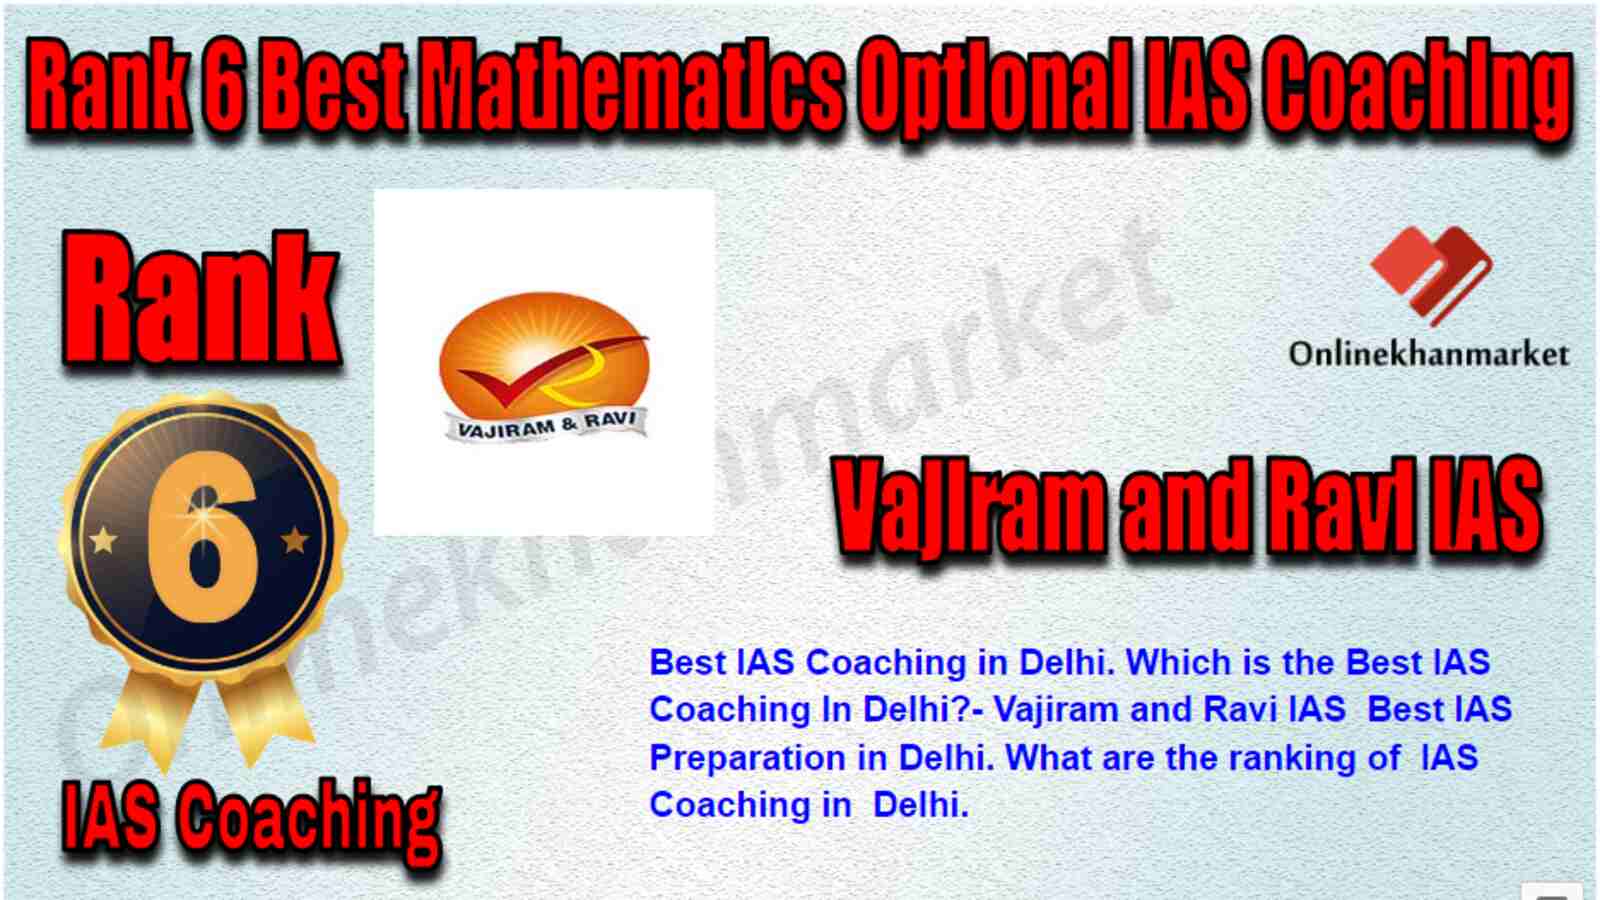 Rank 6 Best Mathematics Optional IAS Coaching